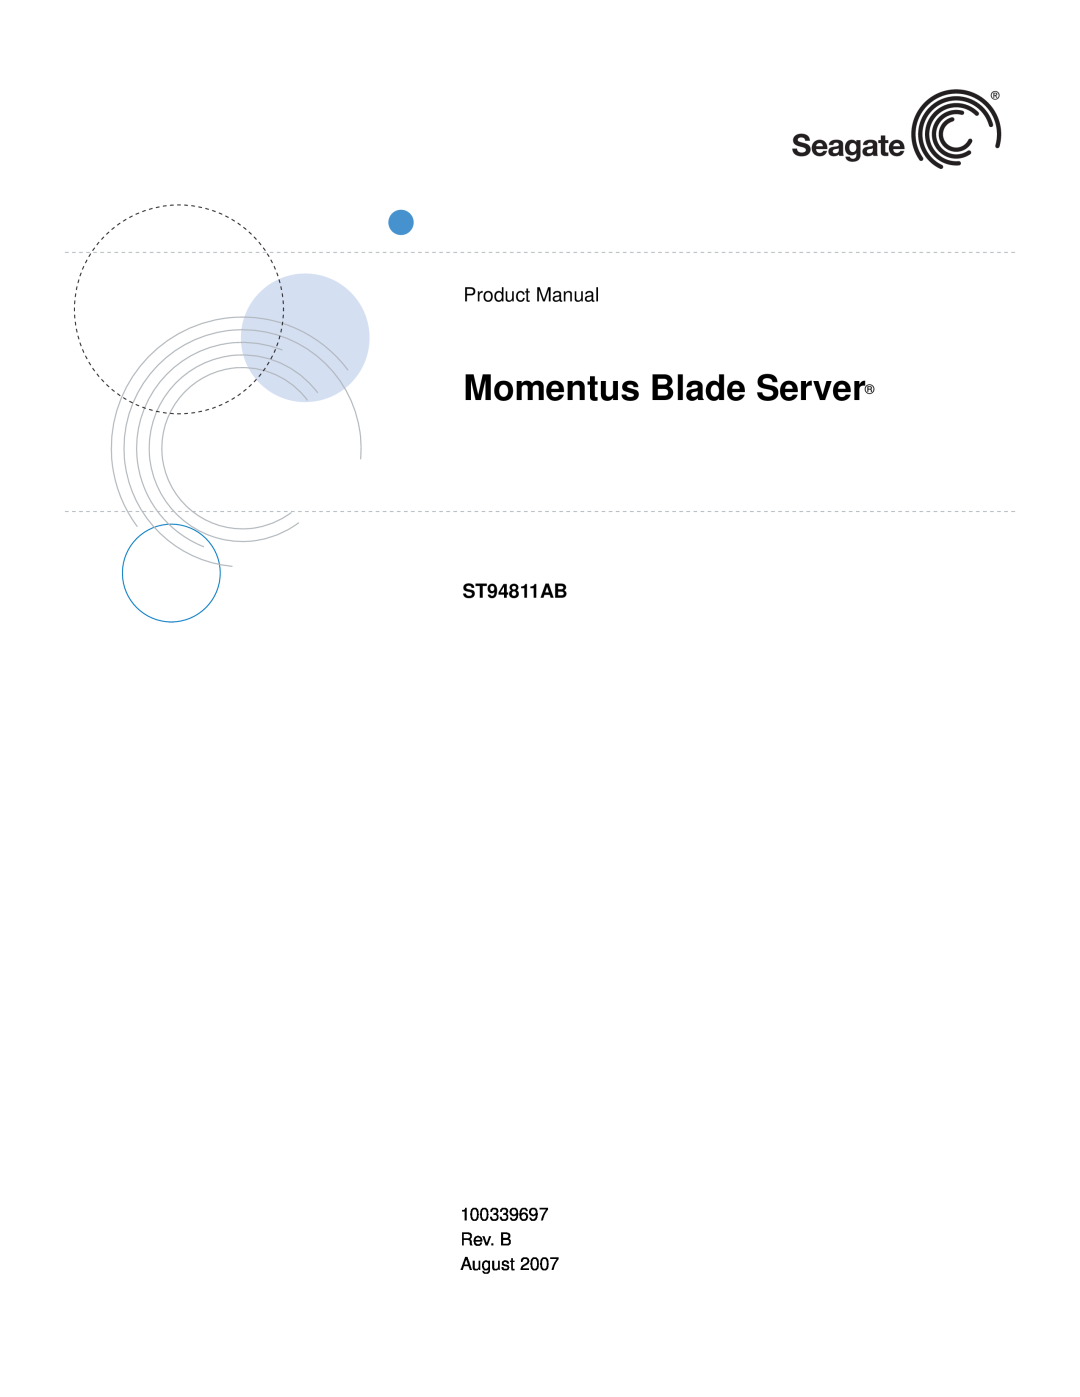 Seagate ST94811AB manual Momentus Blade Server, Product Manual 